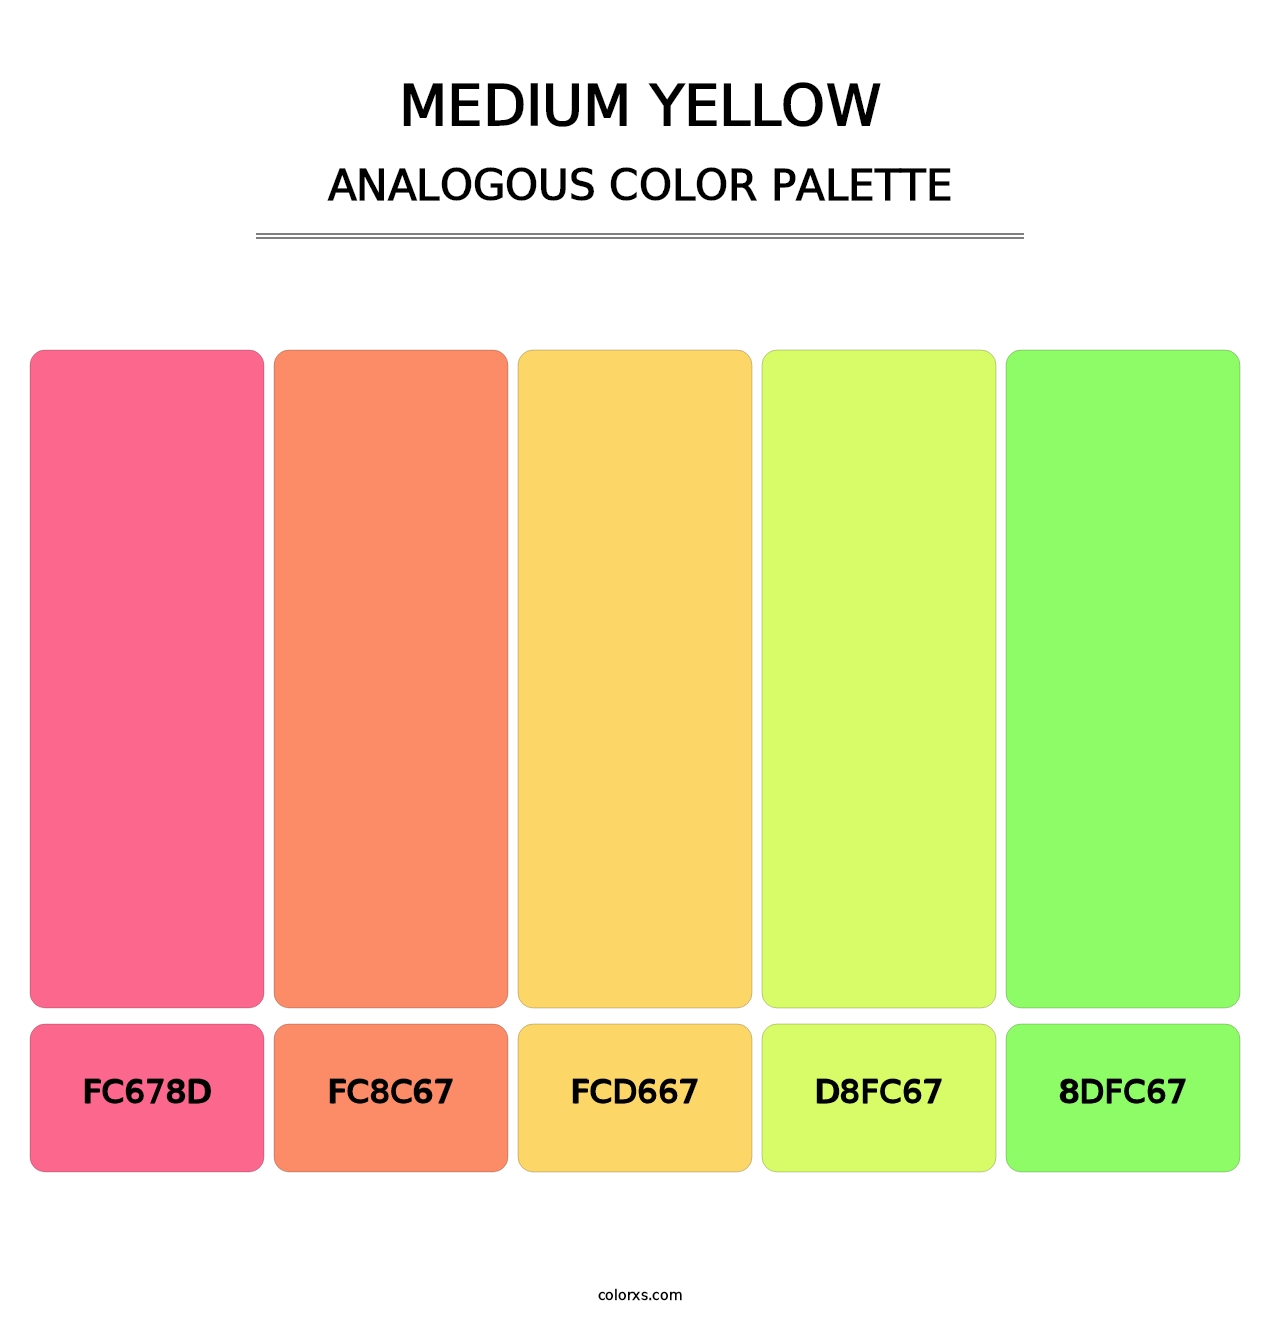 Medium Yellow - Analogous Color Palette